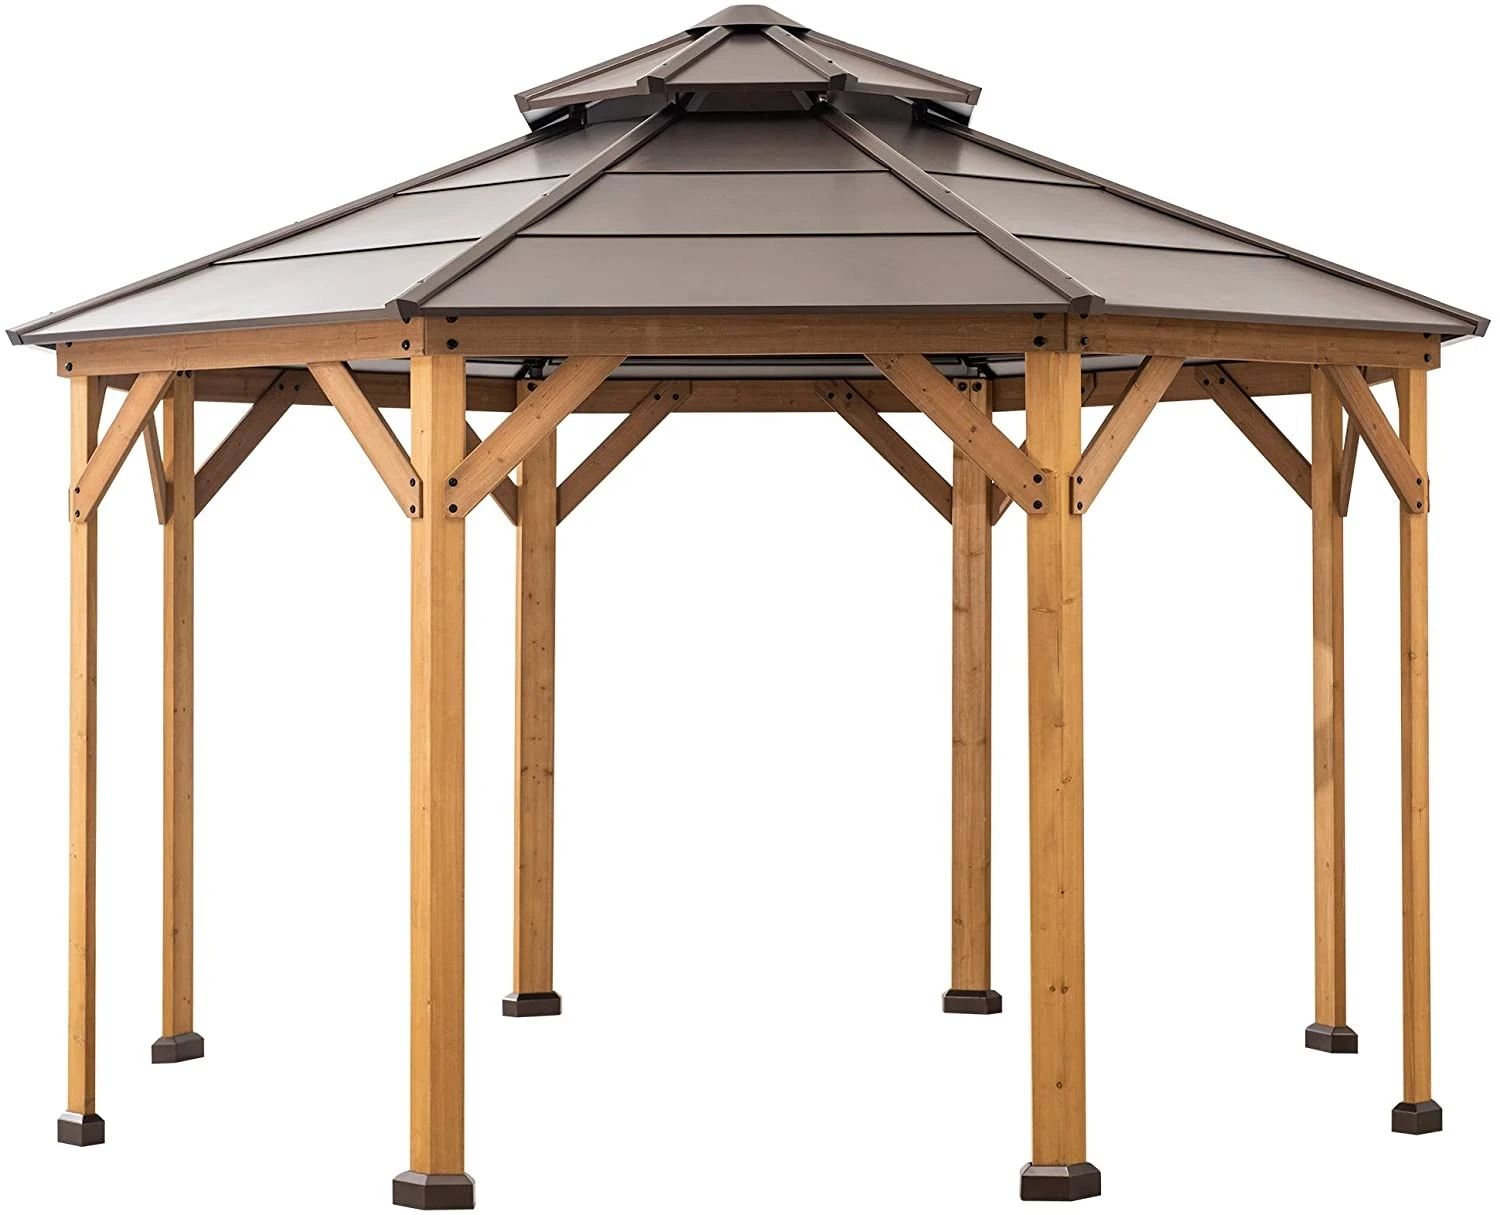 12x12 ft. Cedar Framed Octagon Gazebo With Steel 2-Tier Pavilion Hardtop Gazebo Garden Outdoor Wood